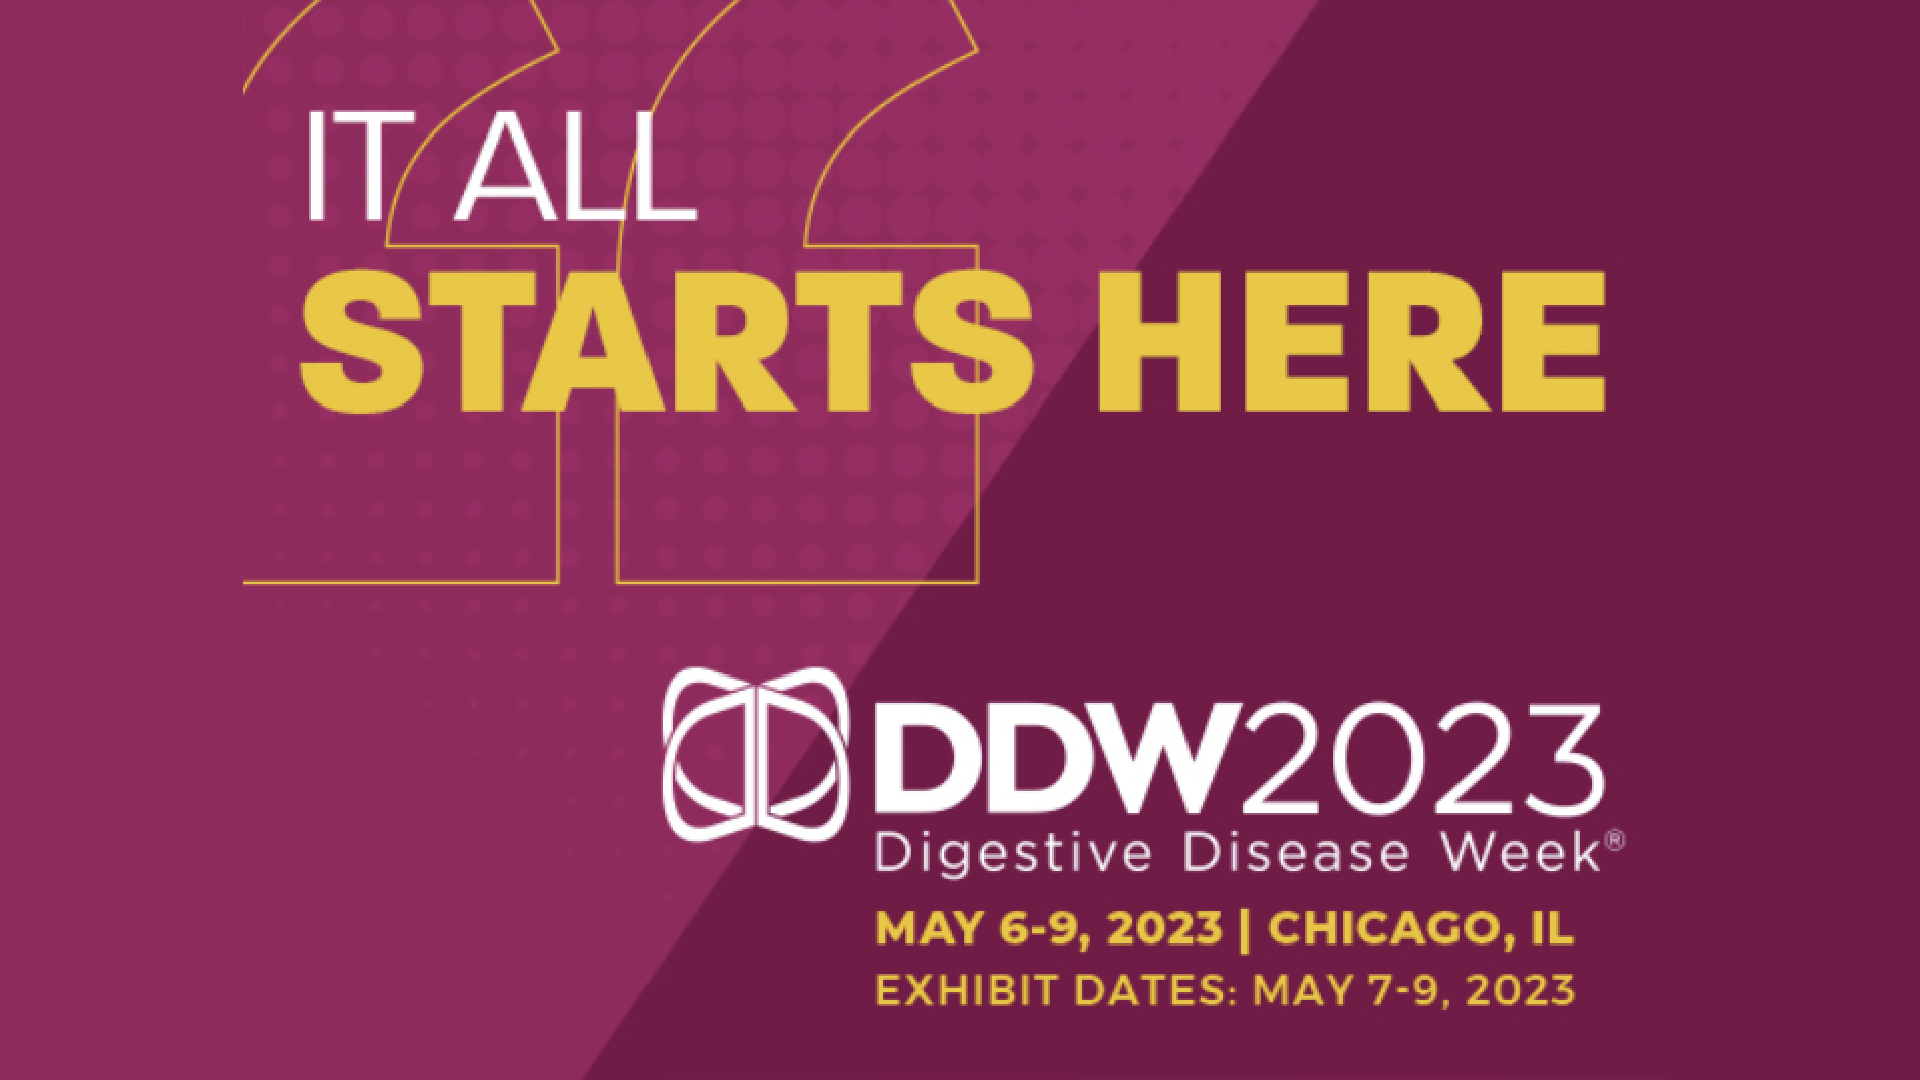 Digestive disease week (DDW) 2023